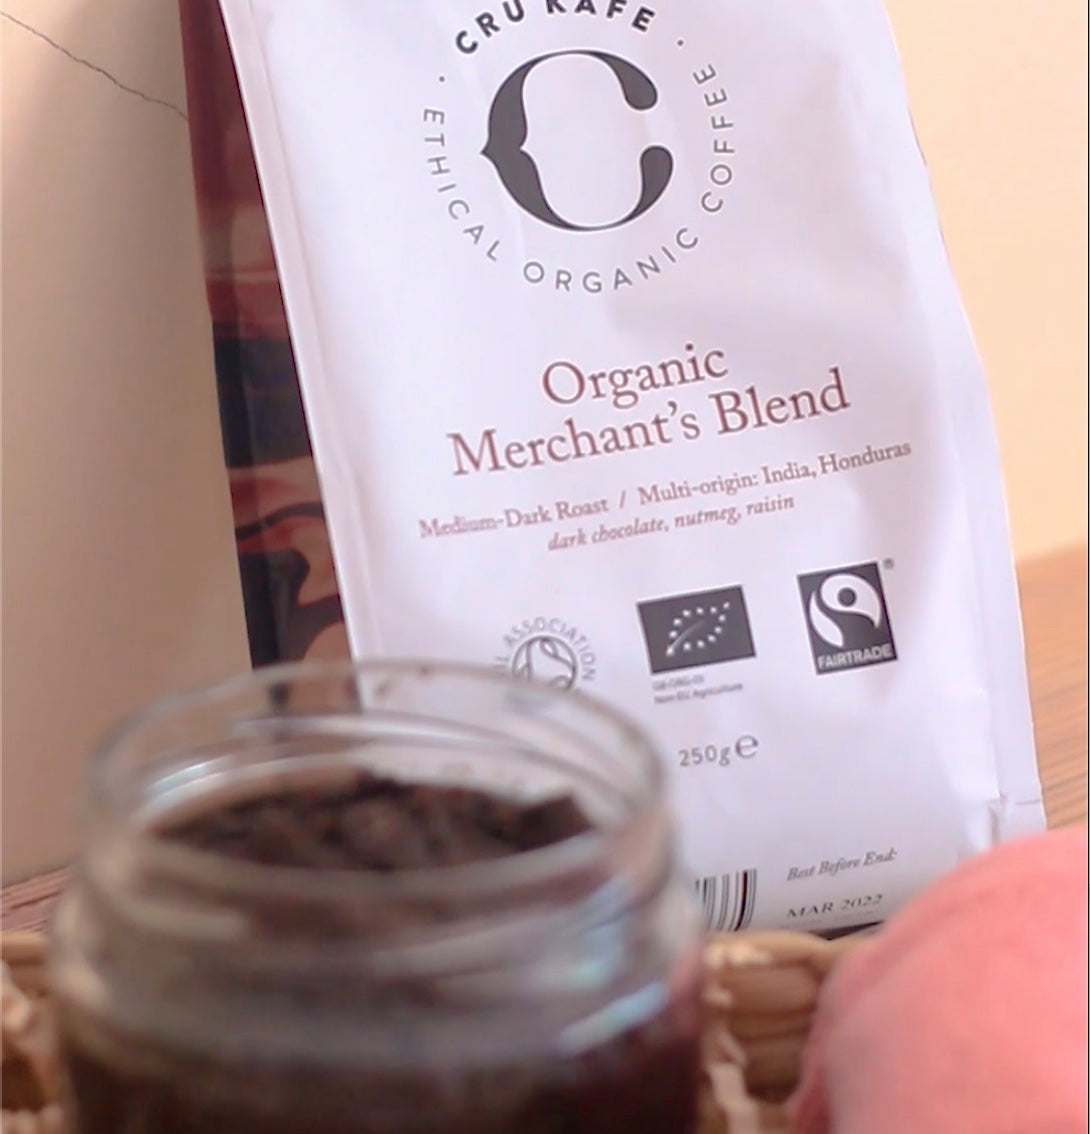 Get smooth and silky skin by making a DIY Coffee Body Scrub! (ft. Cru Kafe)